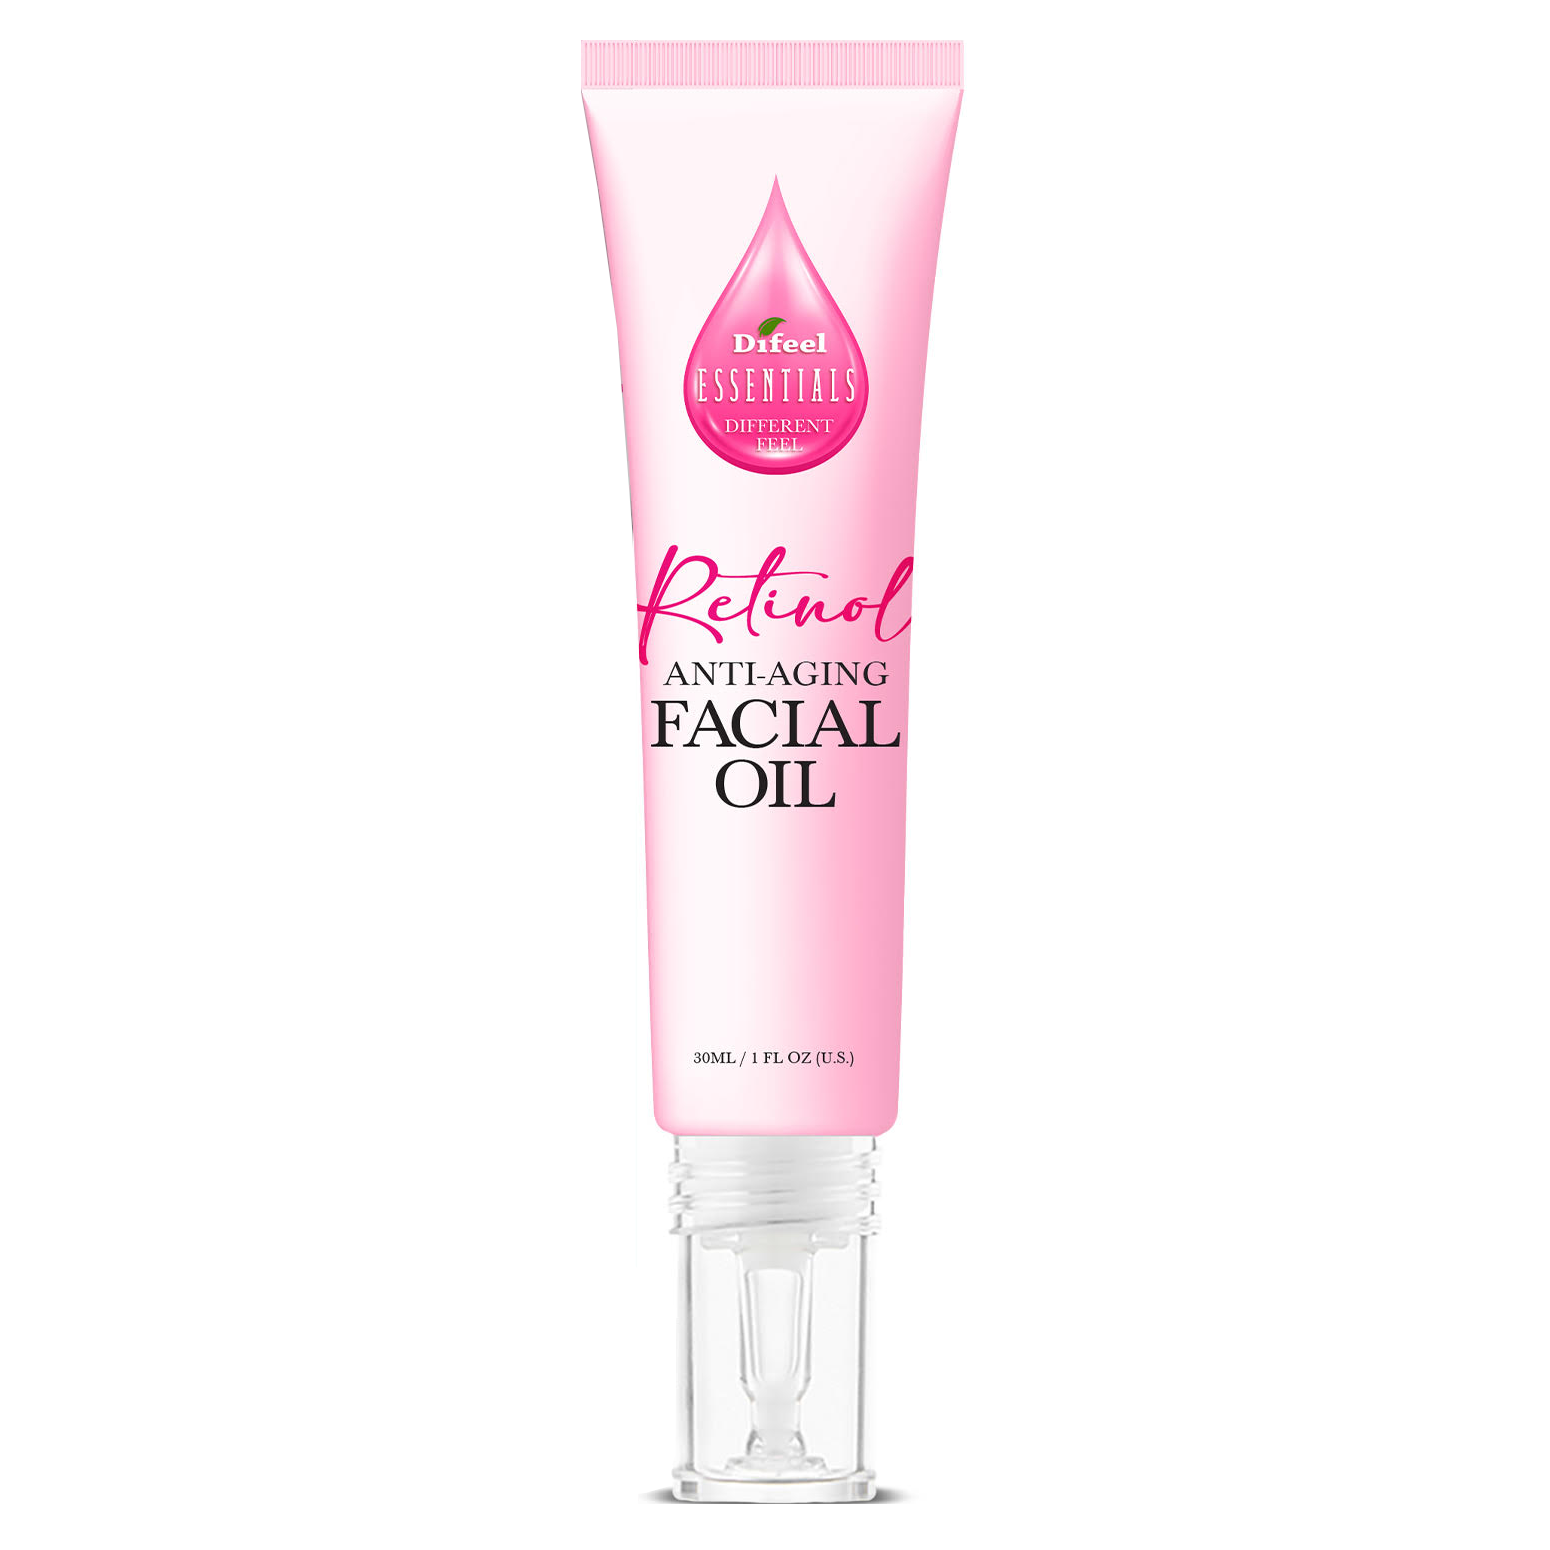 Difeel Essentials Anti-Aging Facial Oil with Retinol 1 oz.